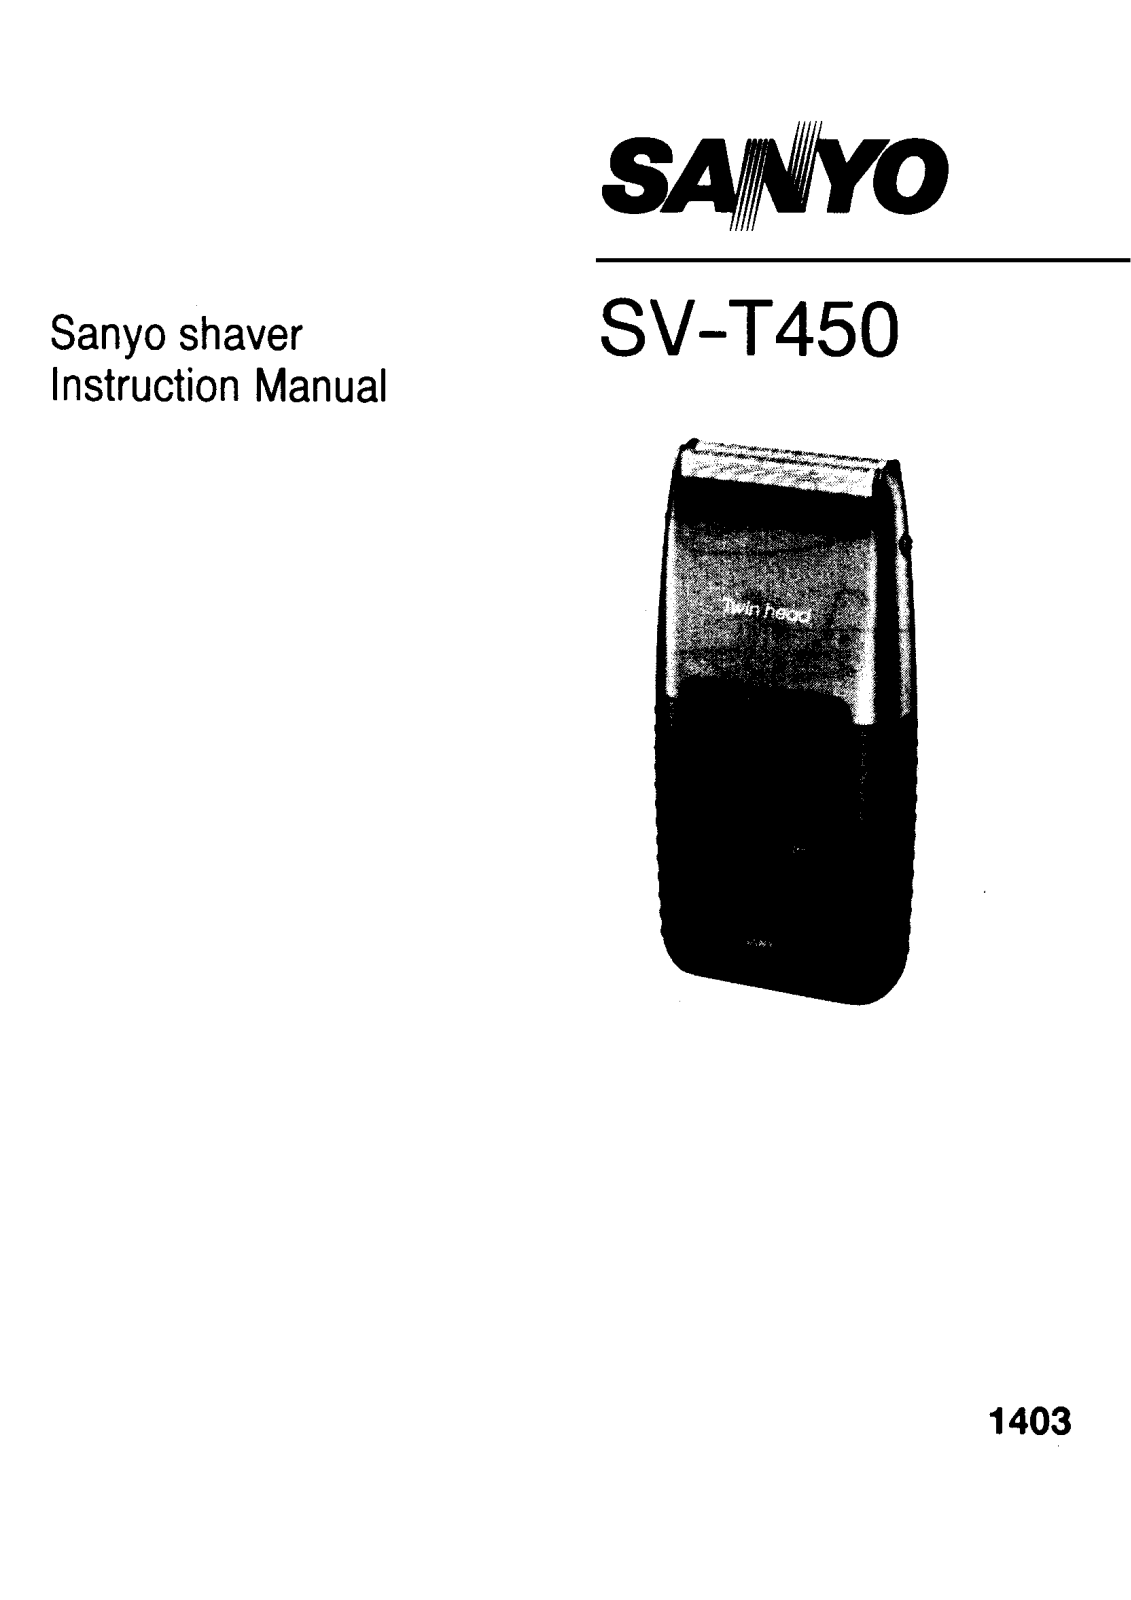 Sanyo SV-T450 Instruction Manual